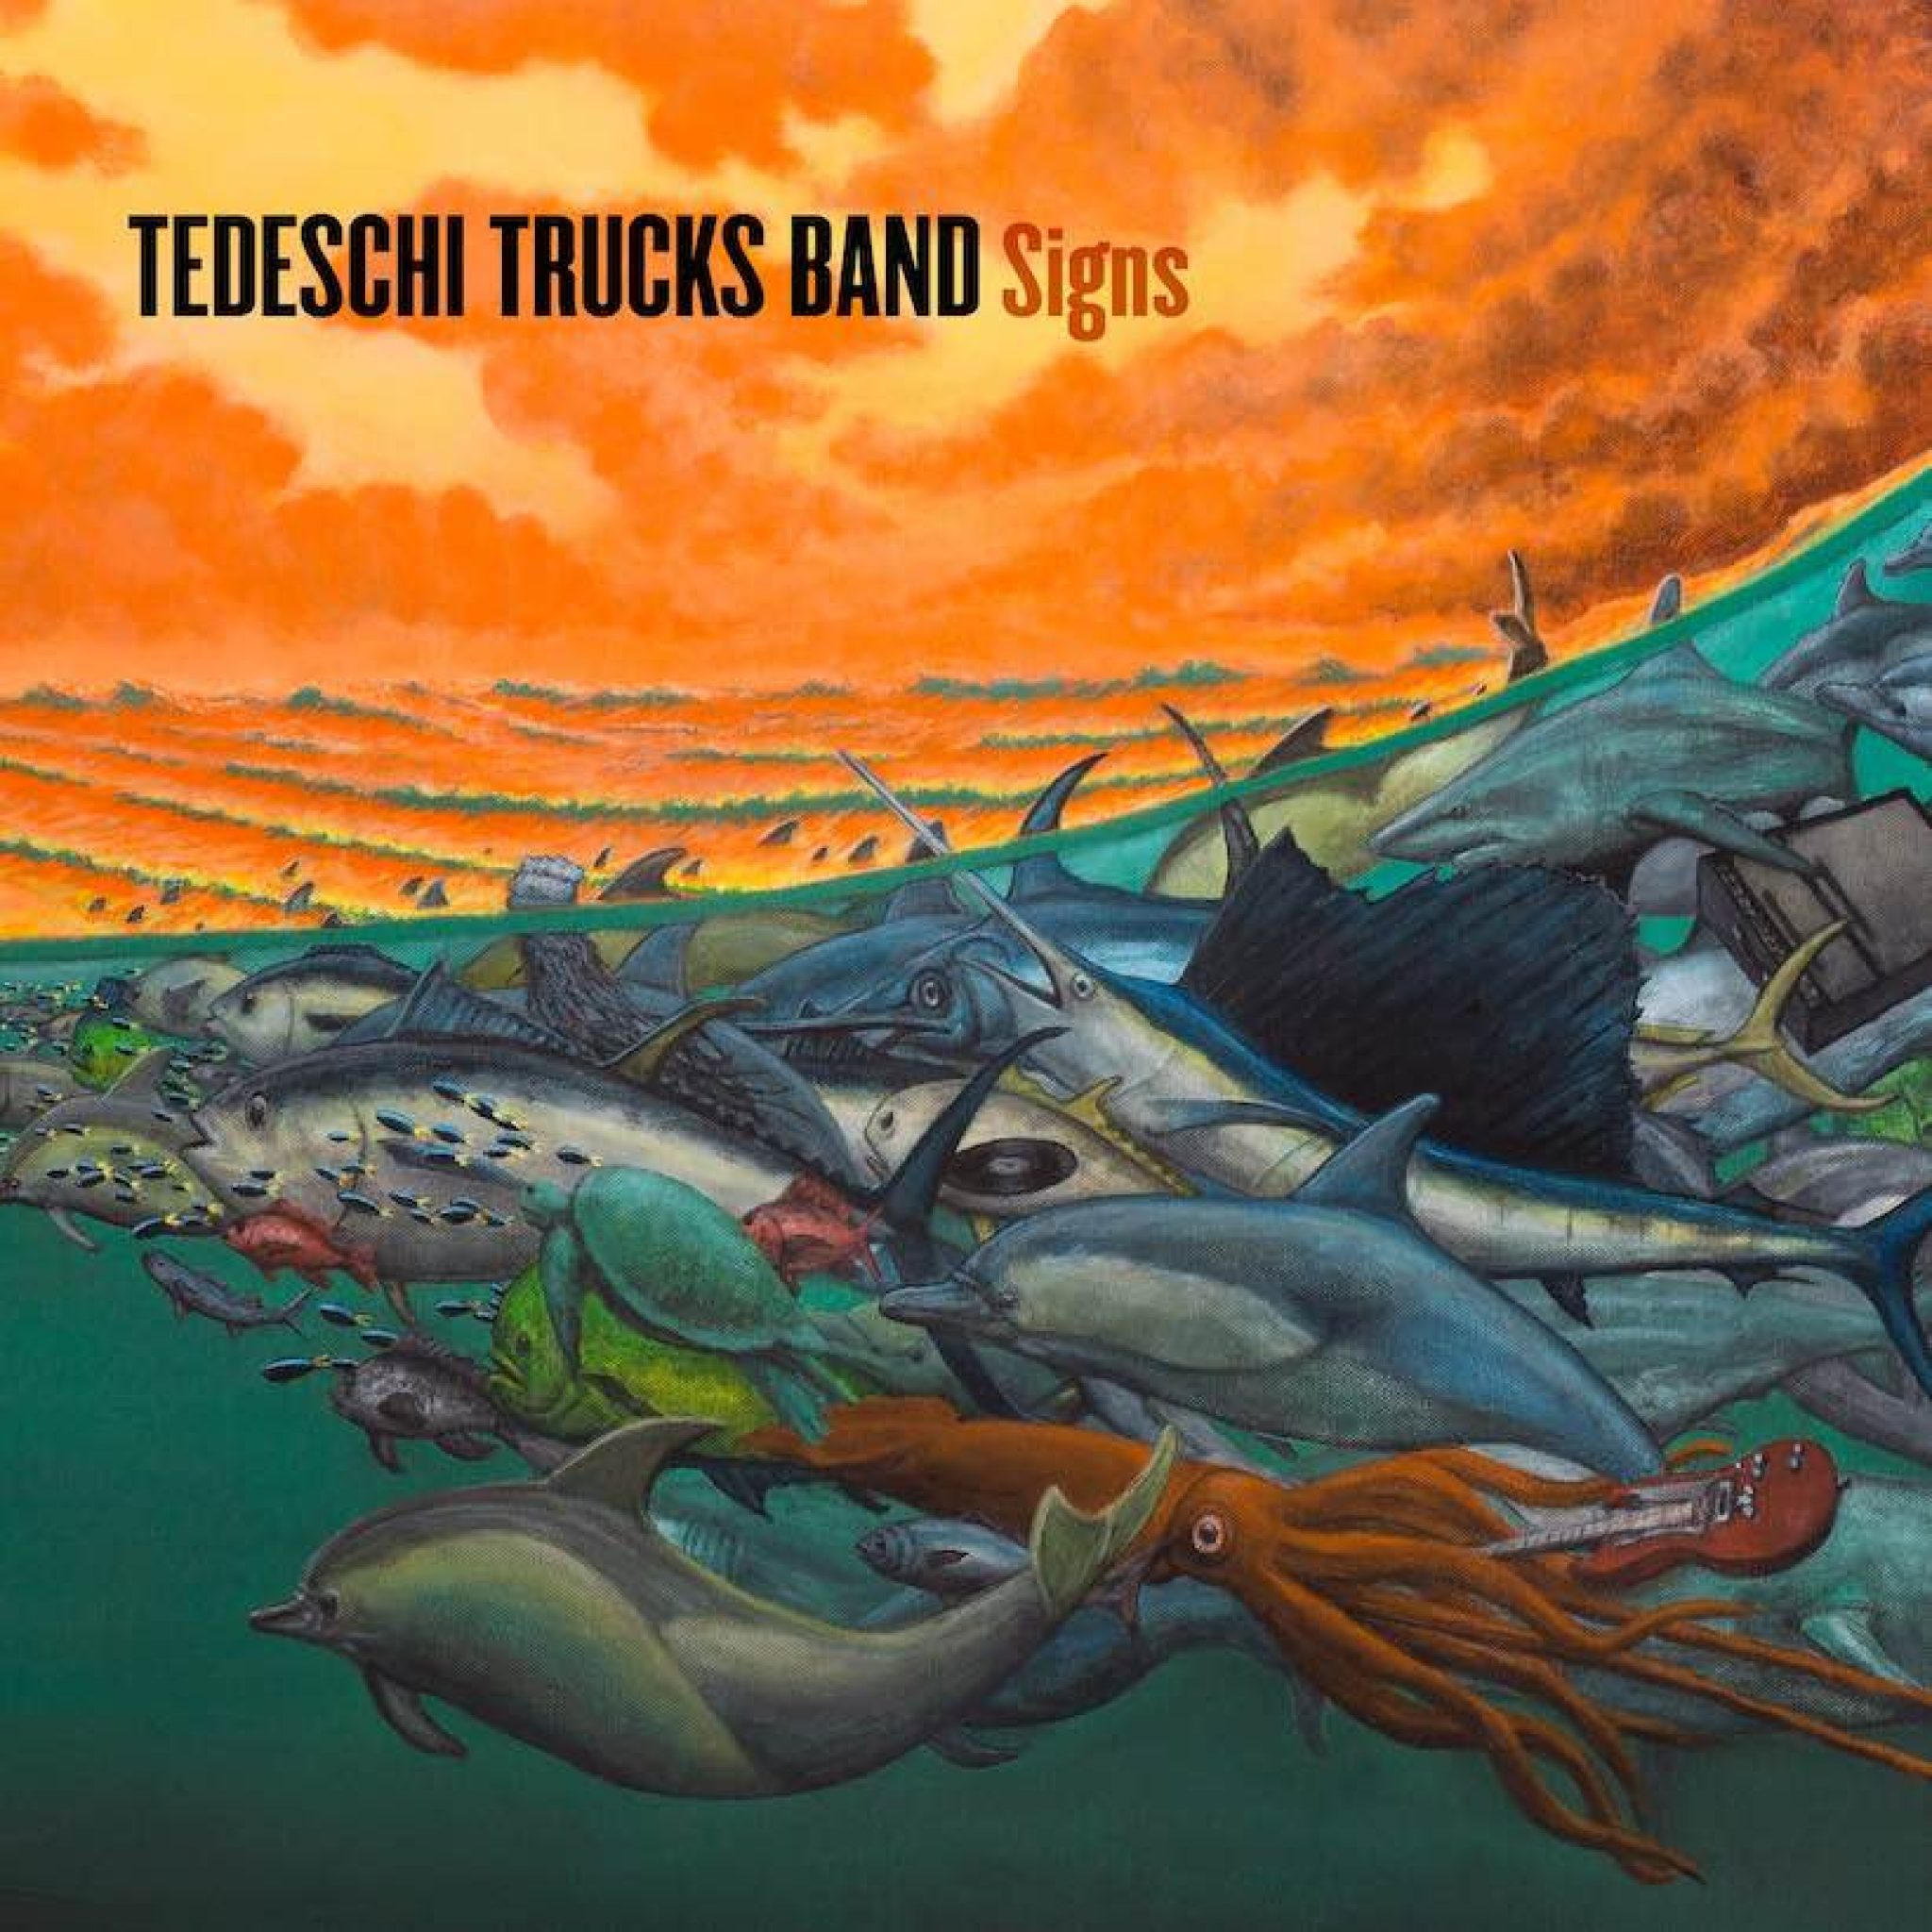 Tedeschi Trucks Band Return With Signs Album Extensive 2019 Tour 